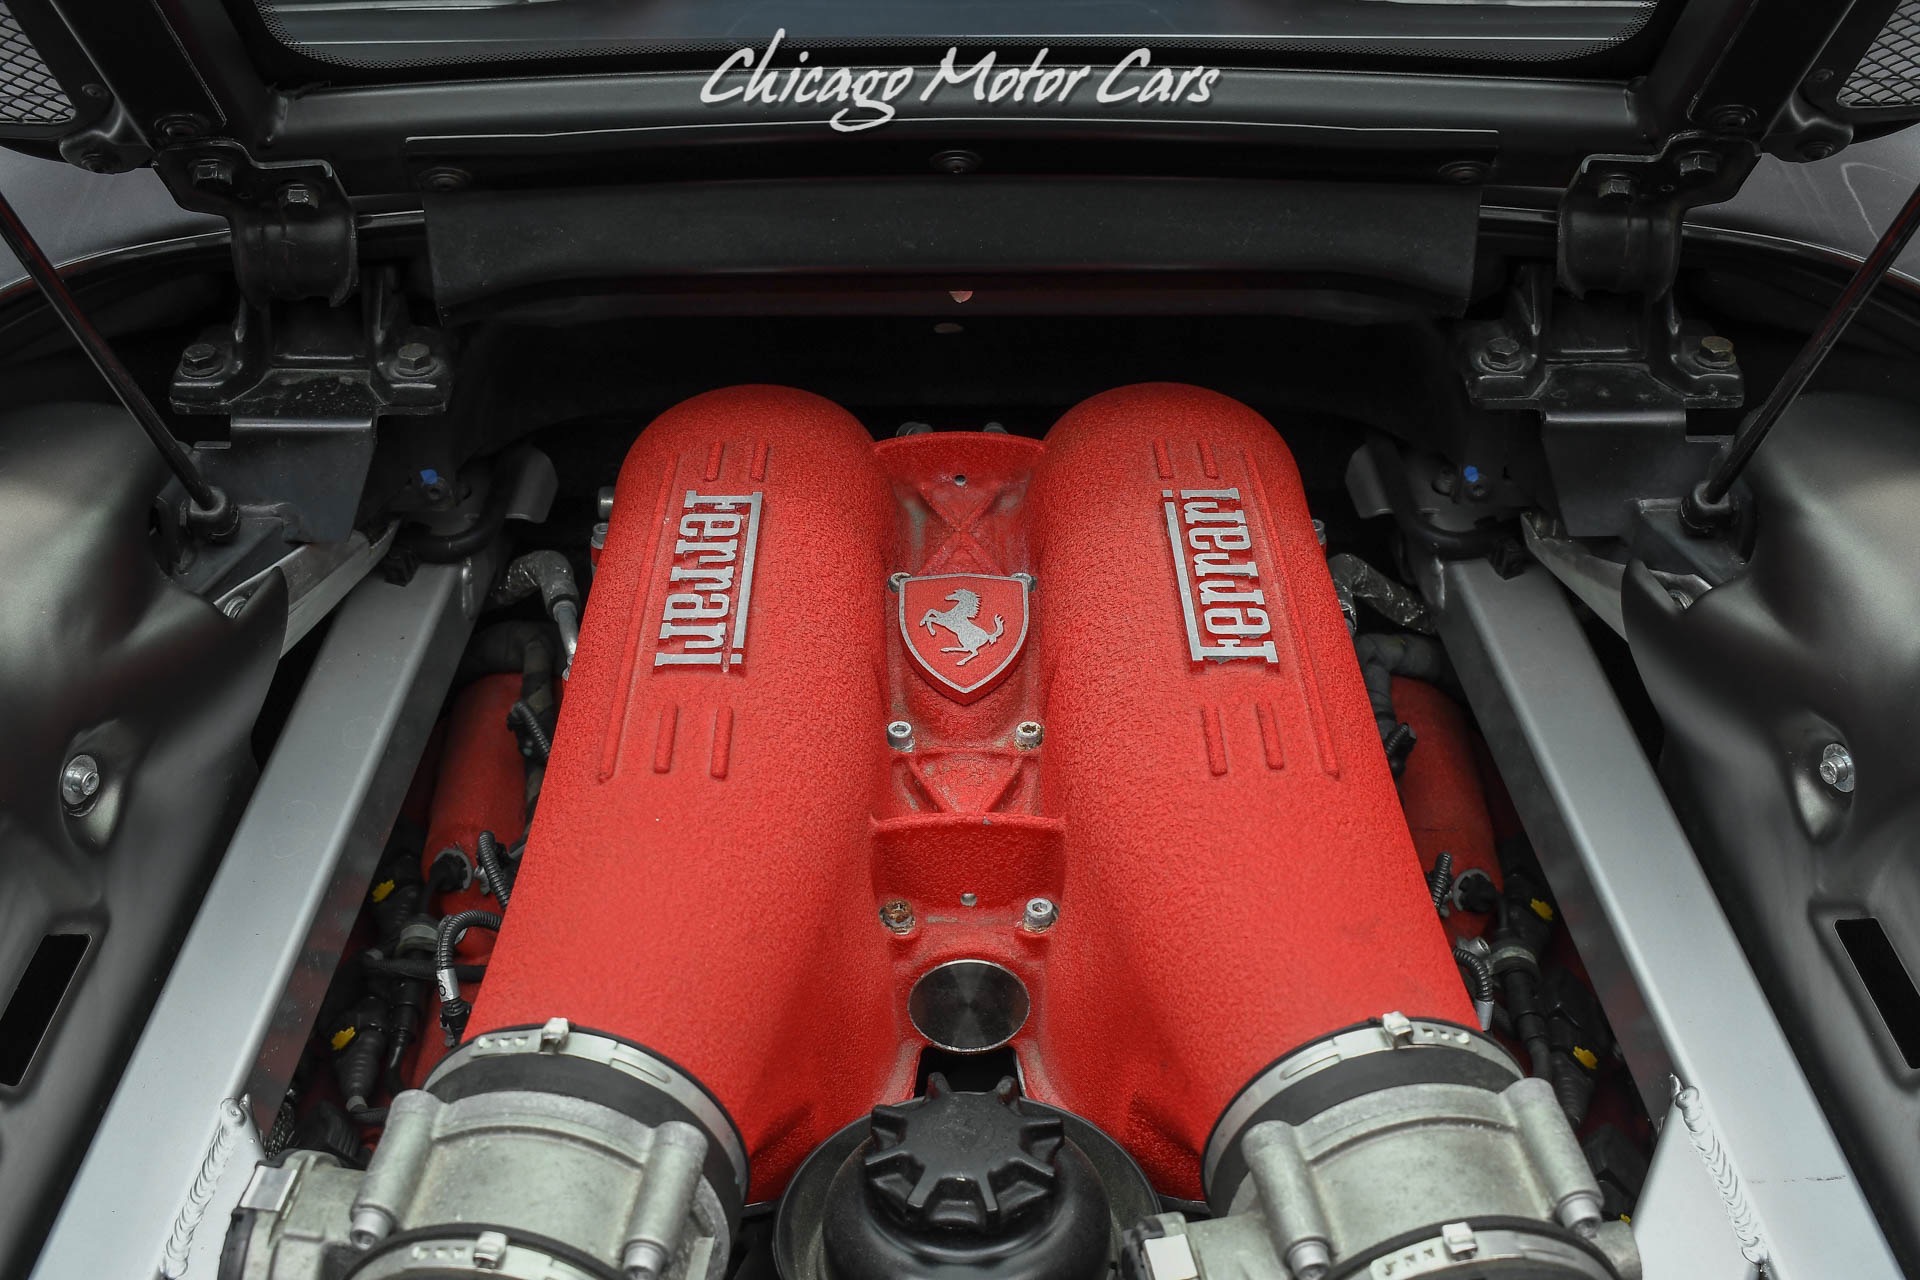 Used-2007-Ferrari-F430-F1-Spider-Daytona-Style-Electric-Seats-Over-30K-in-Recent-Service